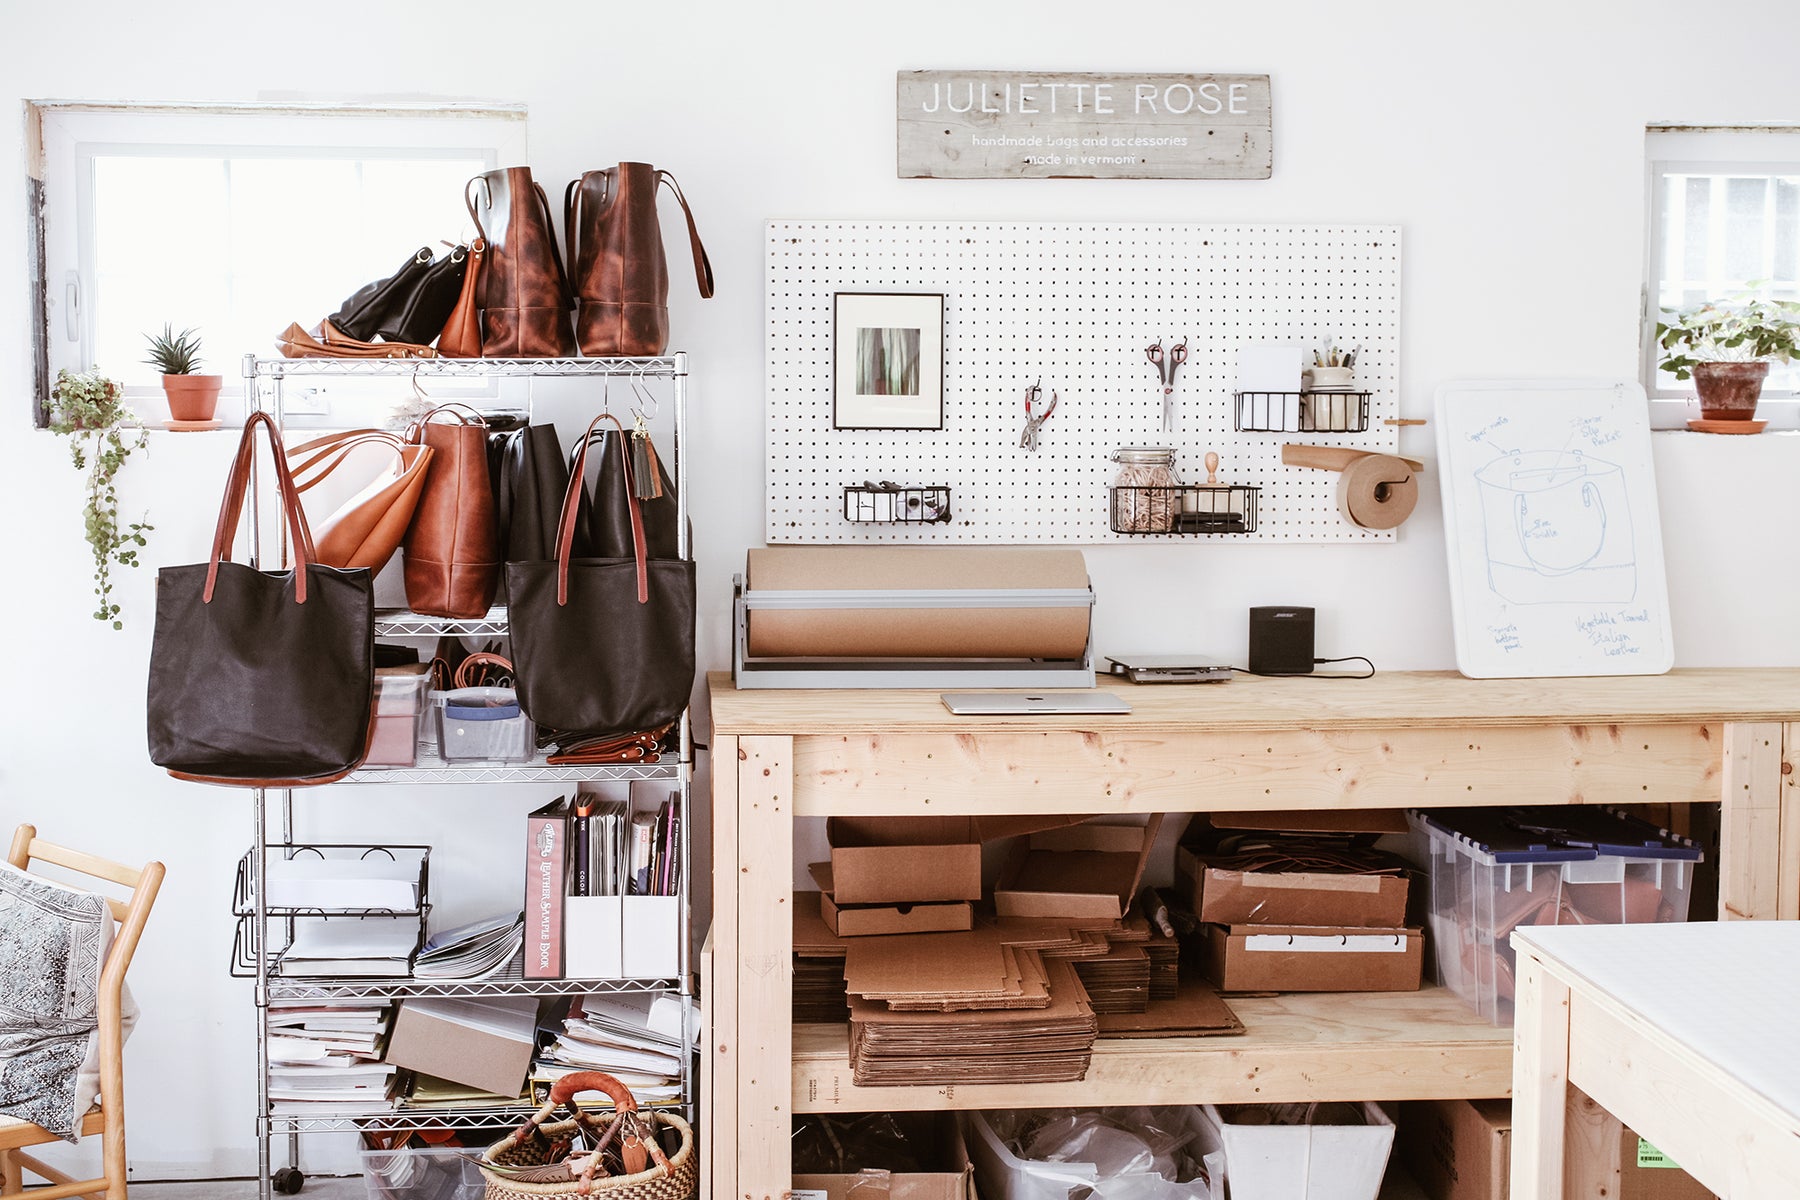 Juliette Rose Designs studio with leather handbags on display